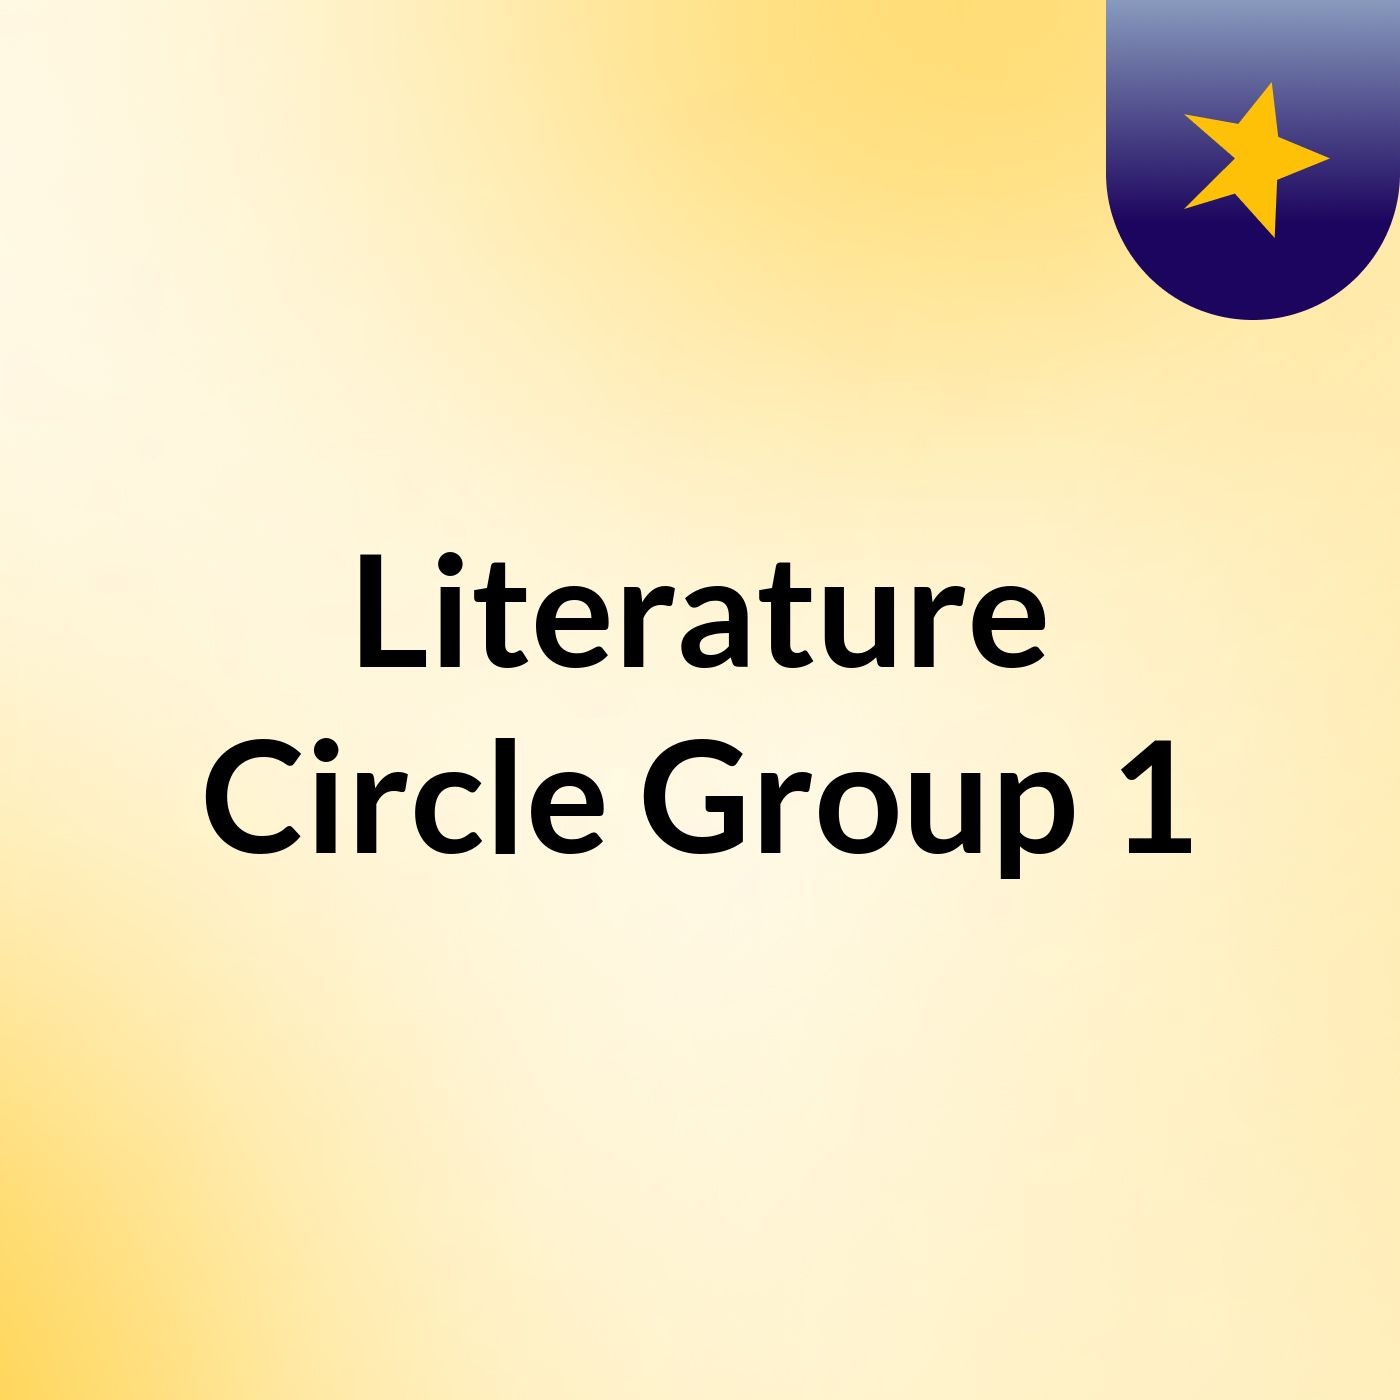 Literacy Circle Group 1 #1, part 2